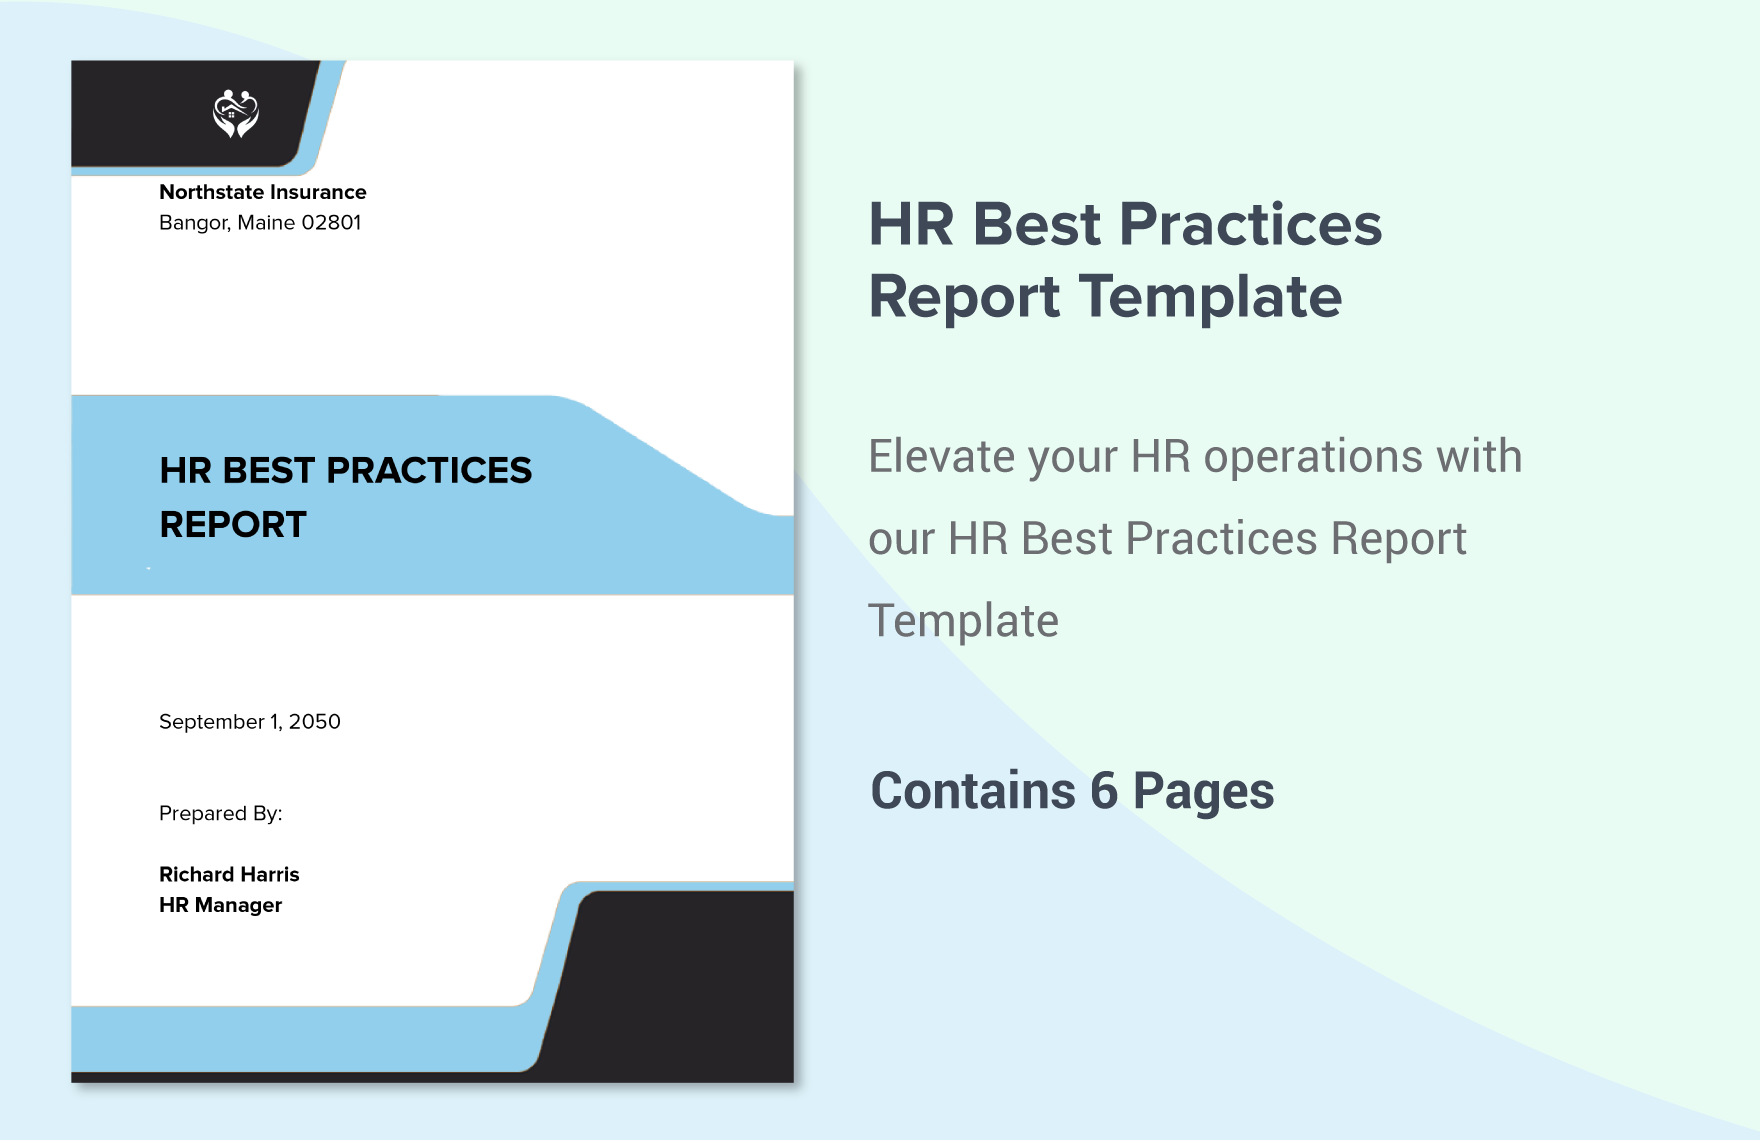 HR Best Practices Report Template